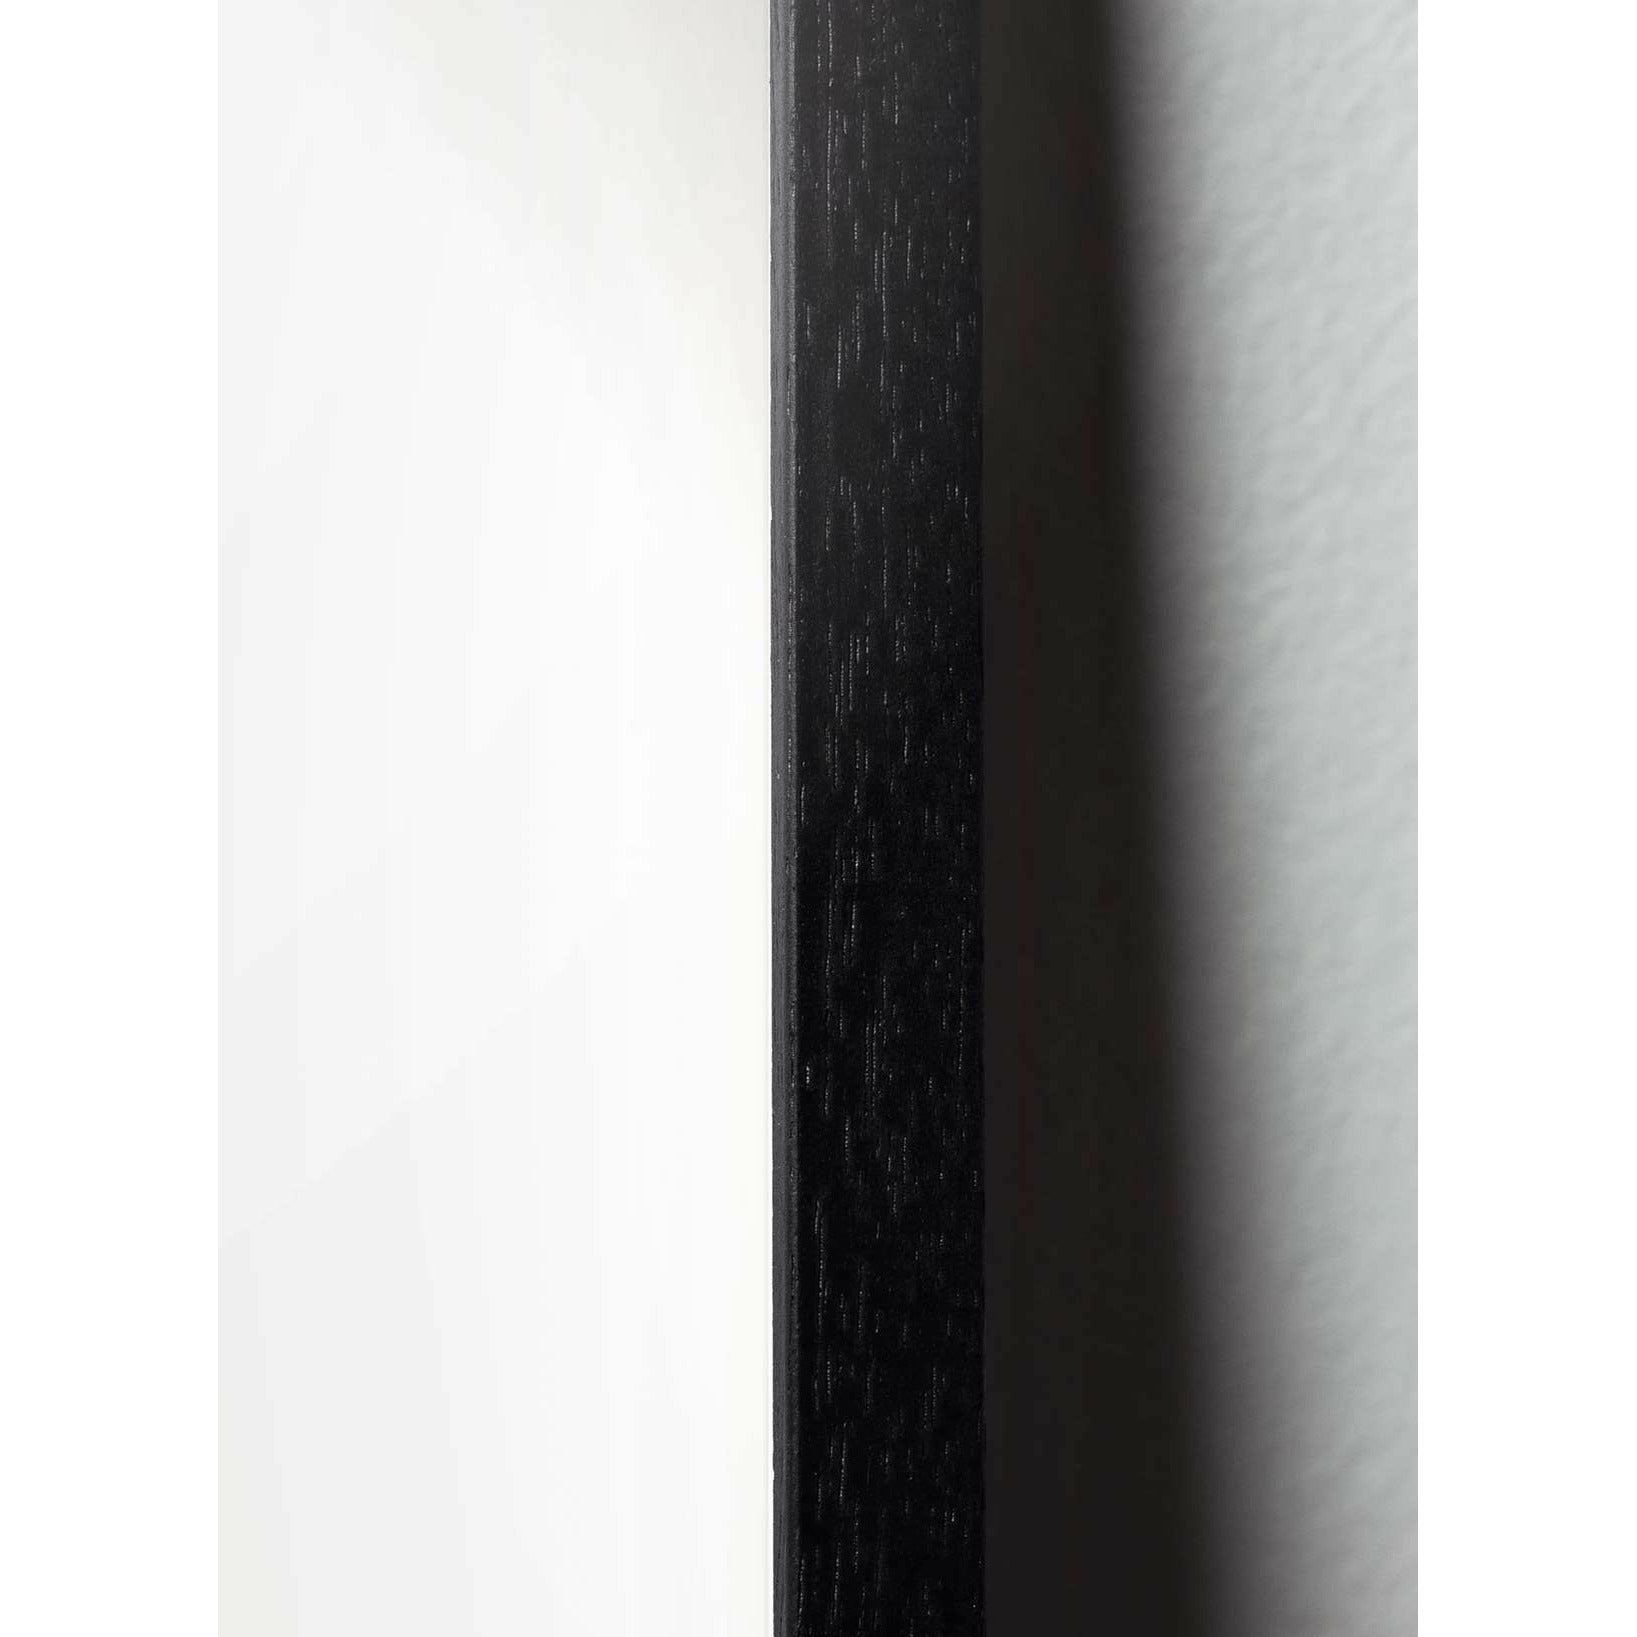 brainchild Eierkruisformaat Poster, frame in zwart gelakt hout a5, zwart